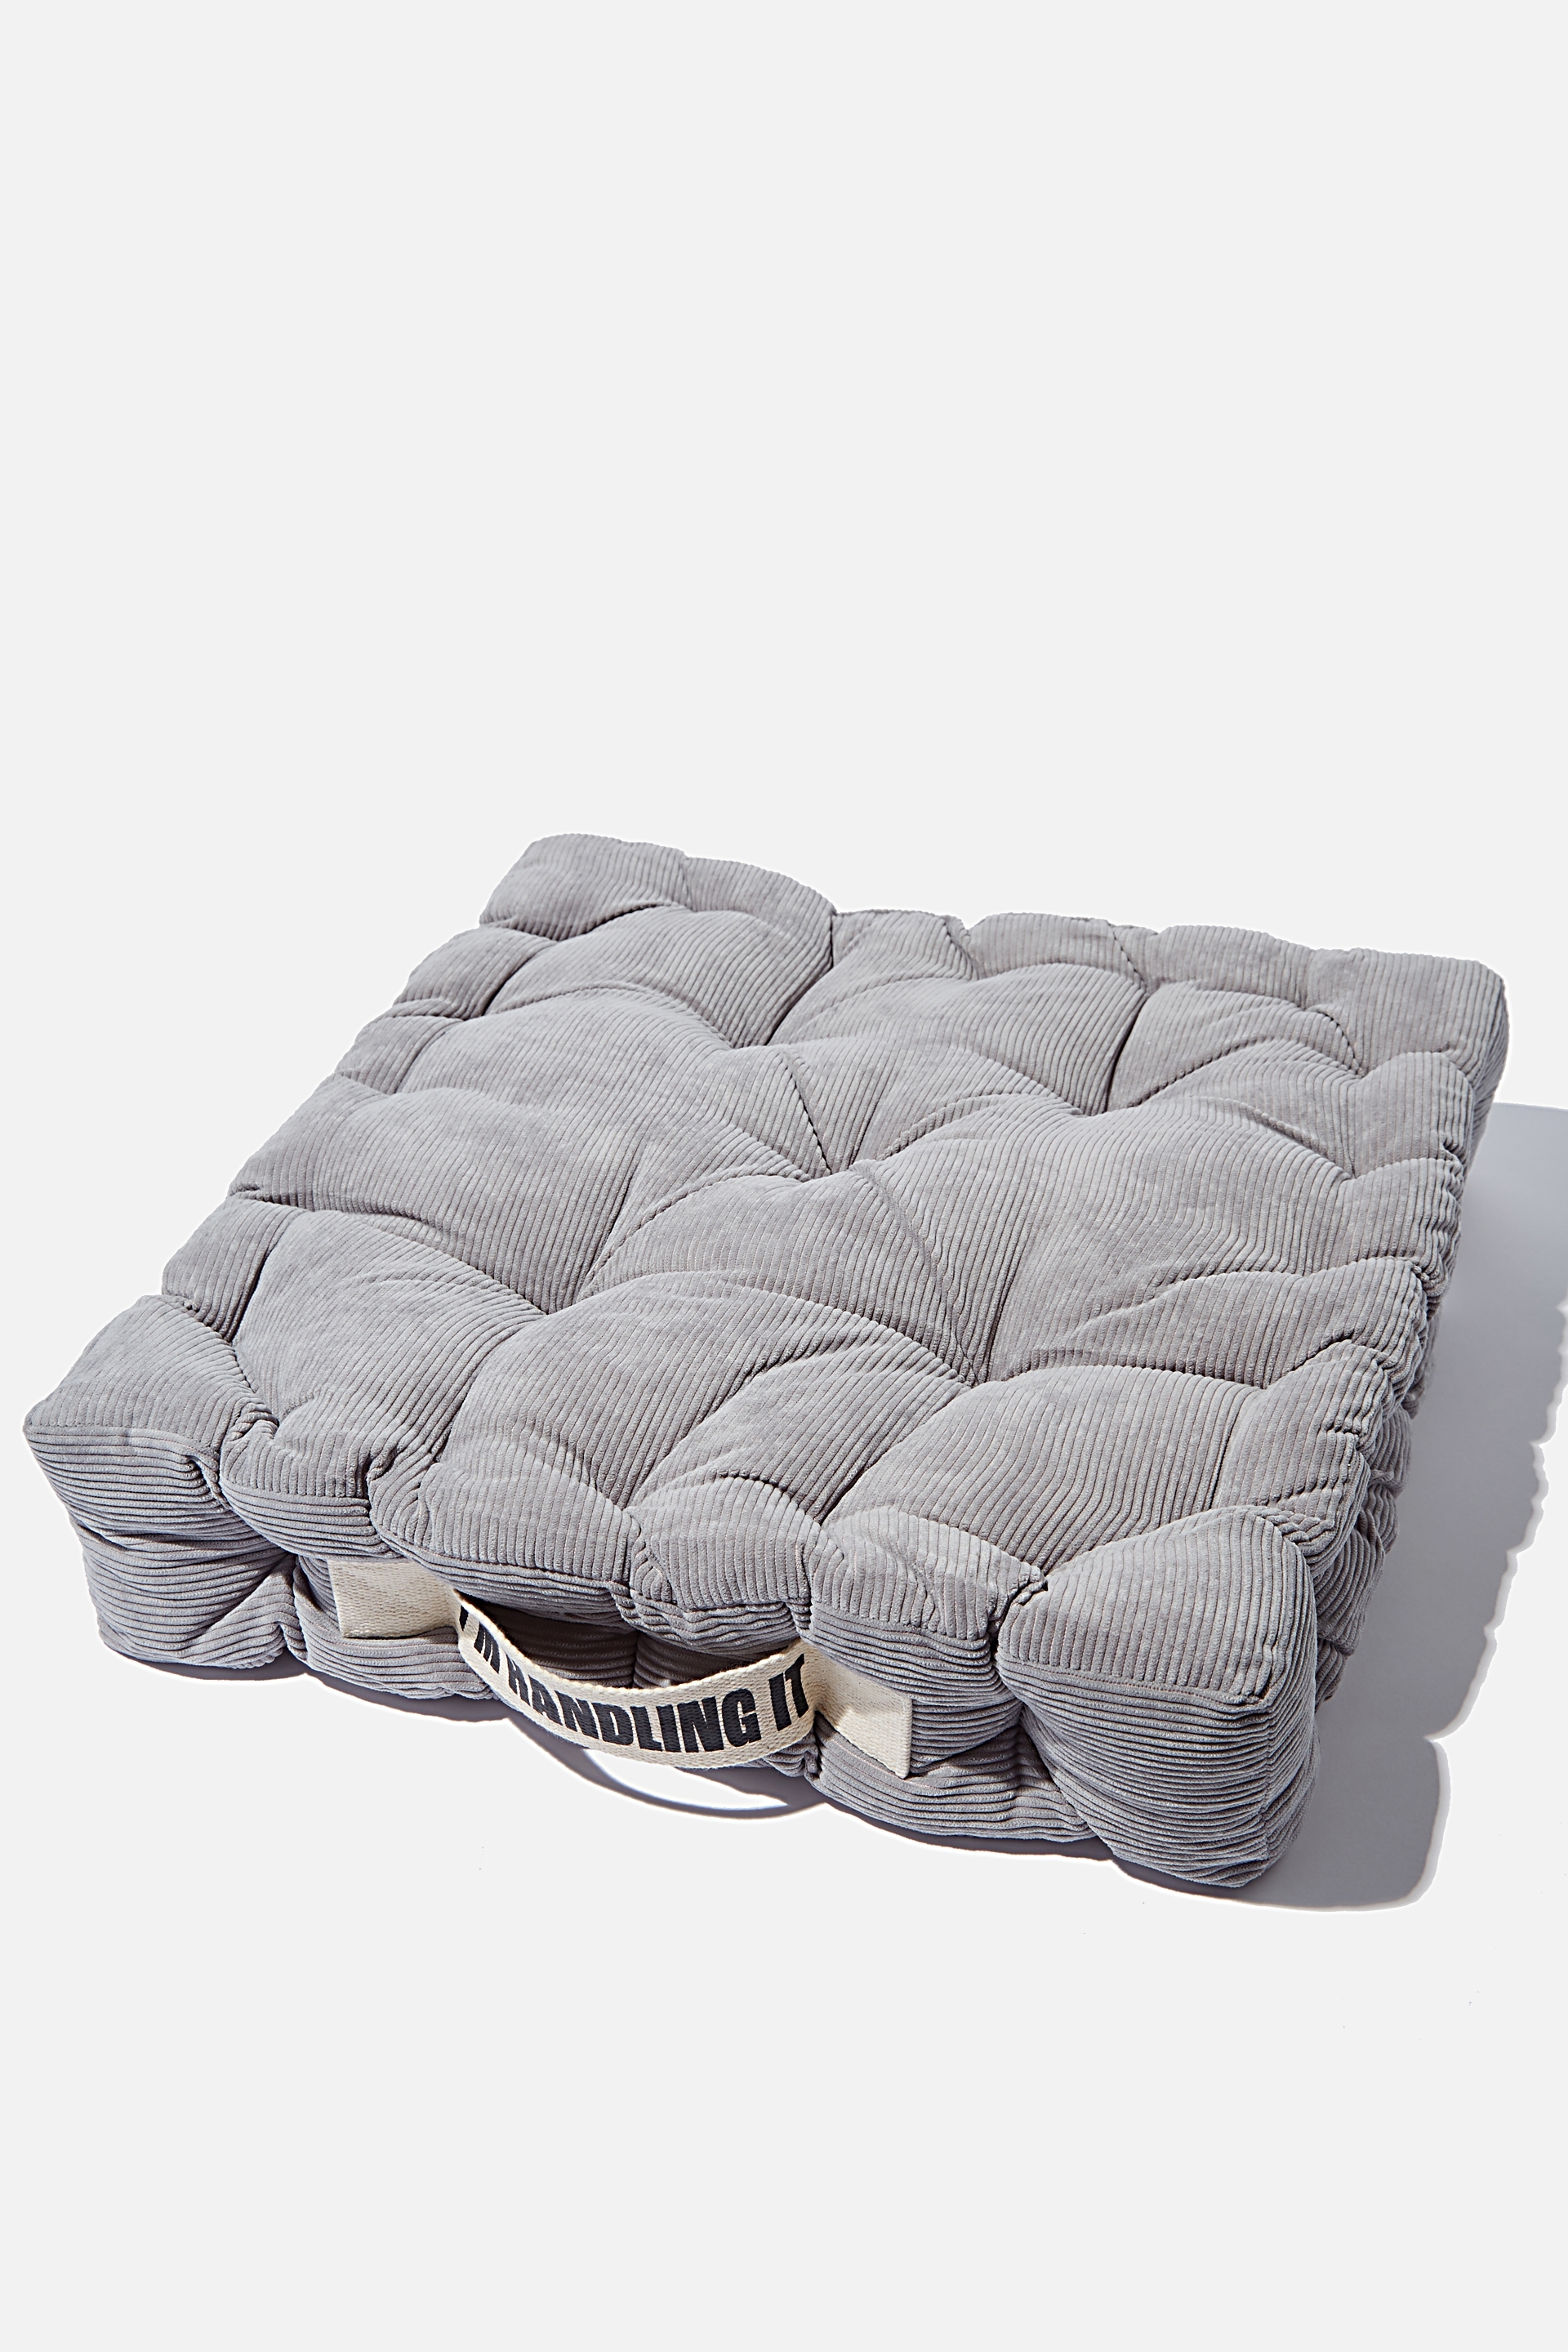 Typo - Floor Cushion - Cool grey corduroy